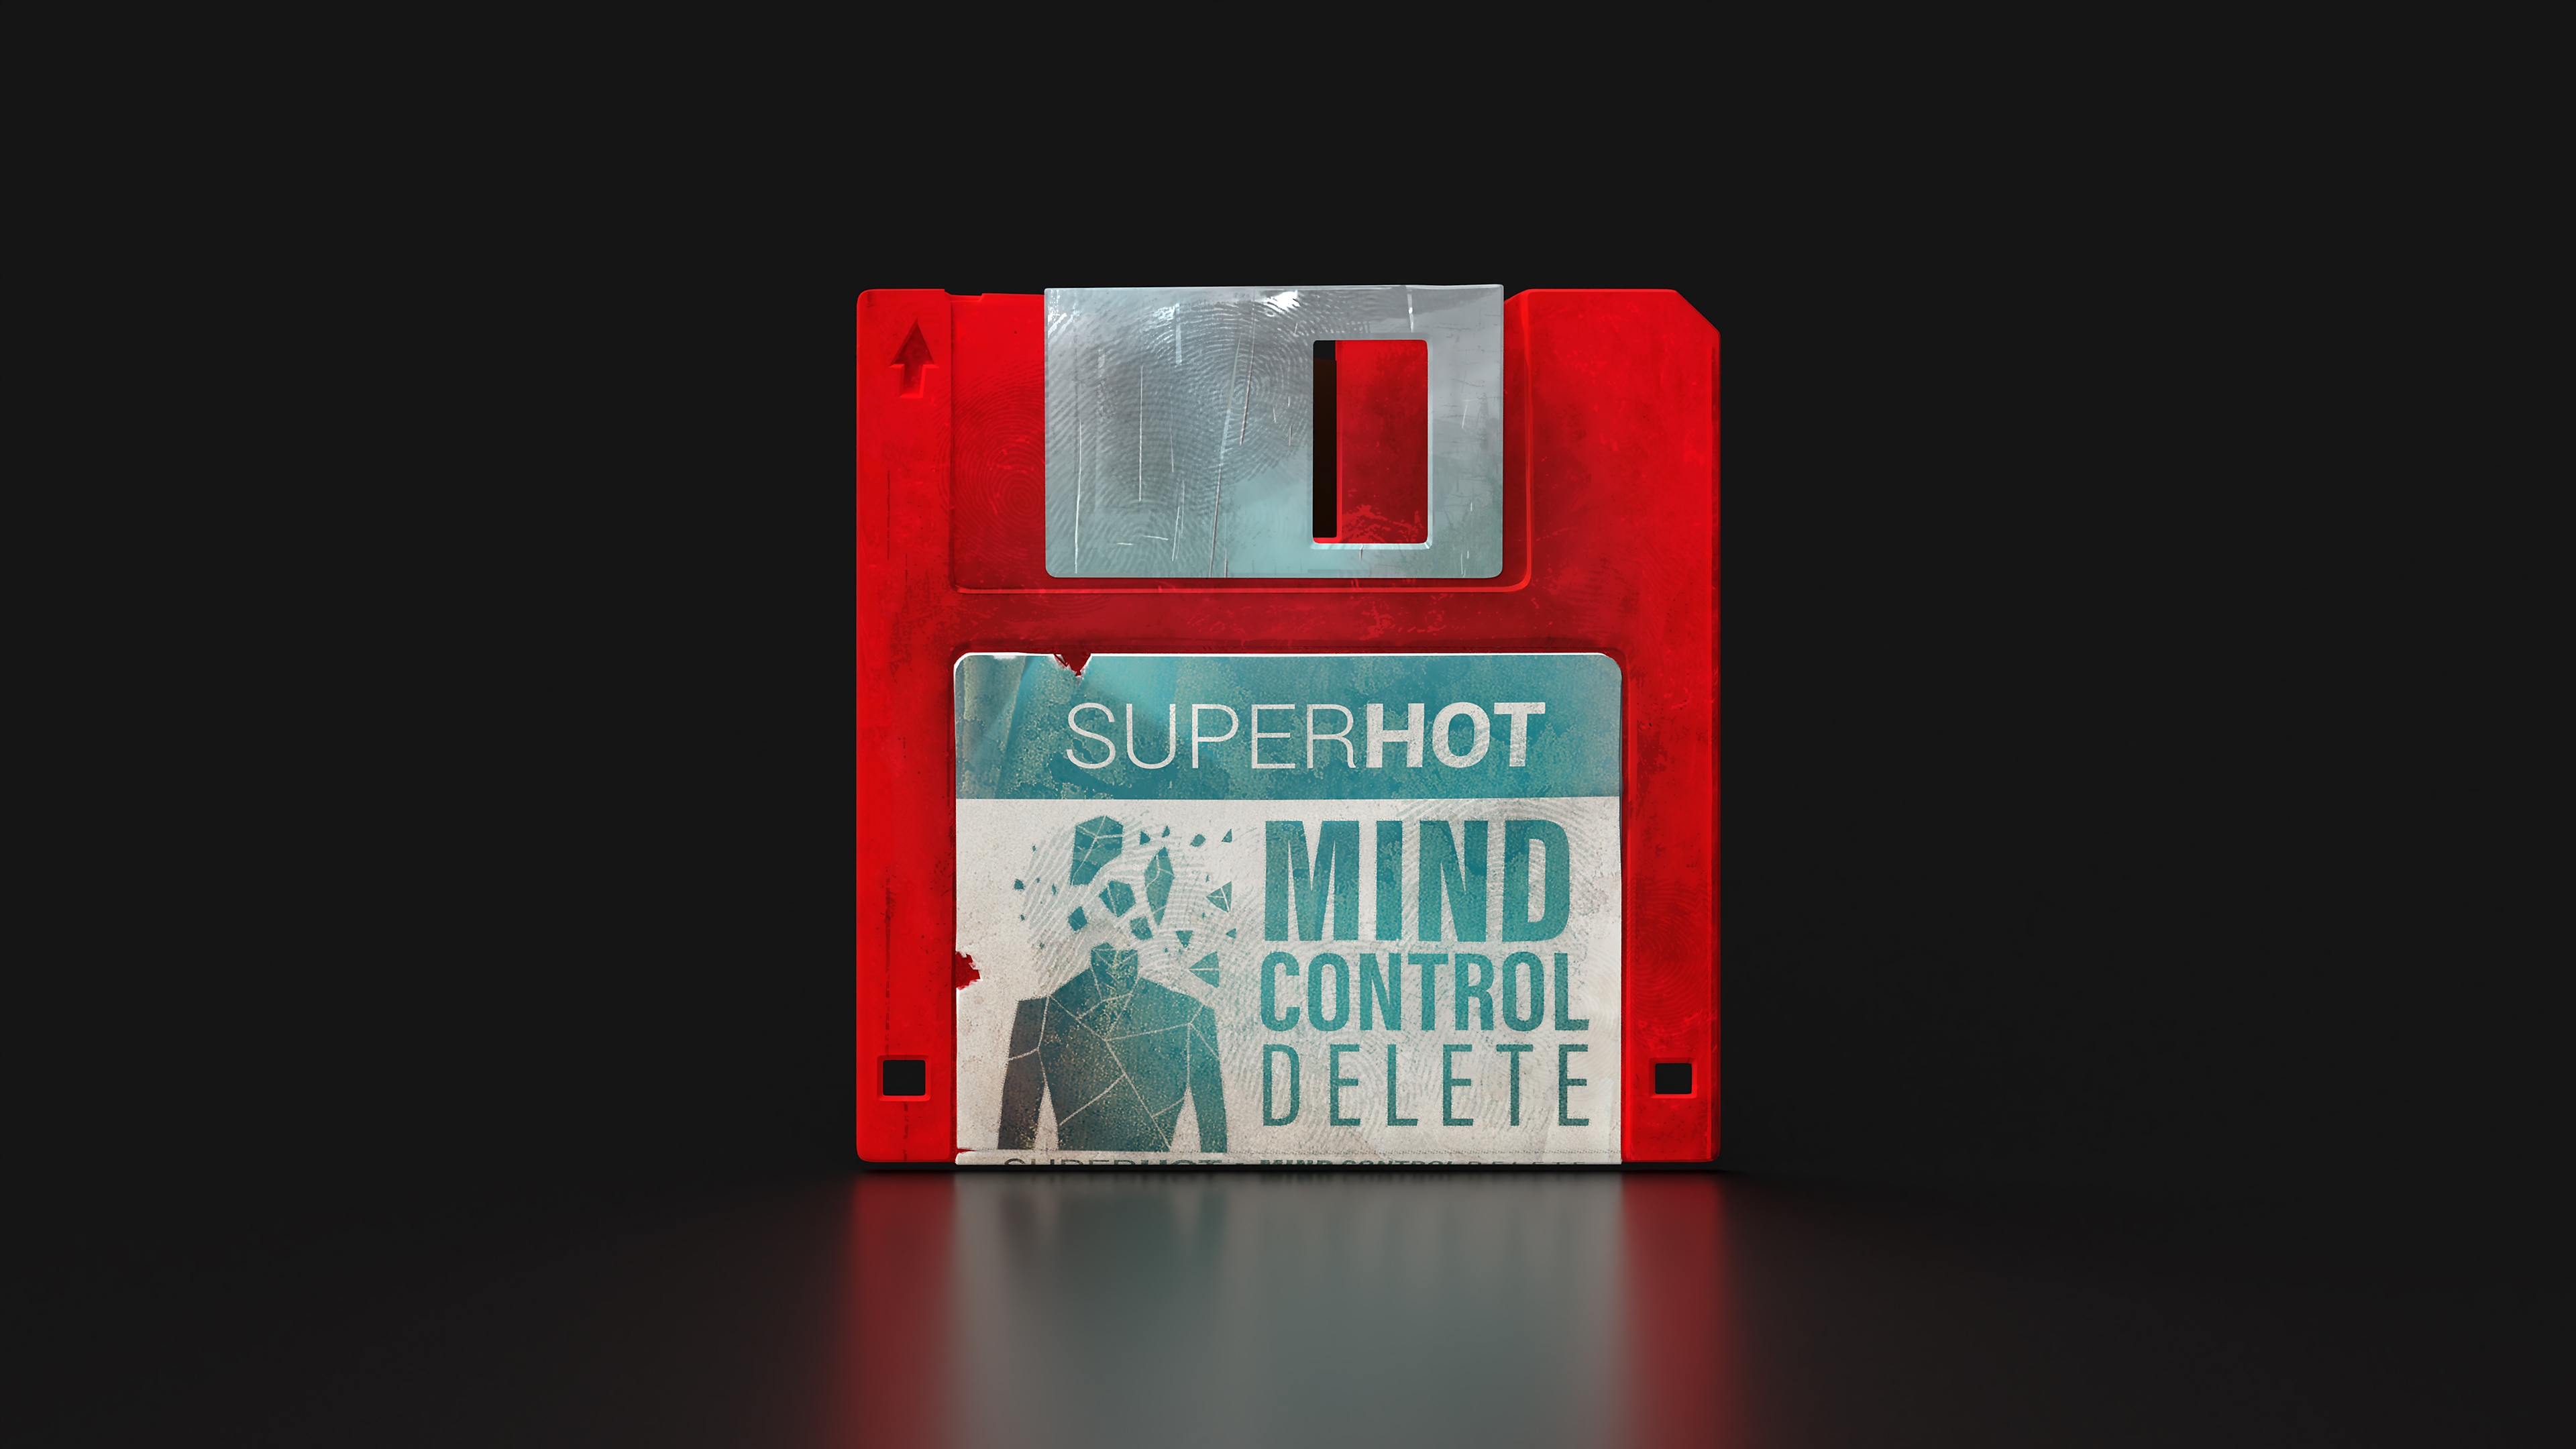 SUPERHOT: MIND CONTROL DELETE Desktop